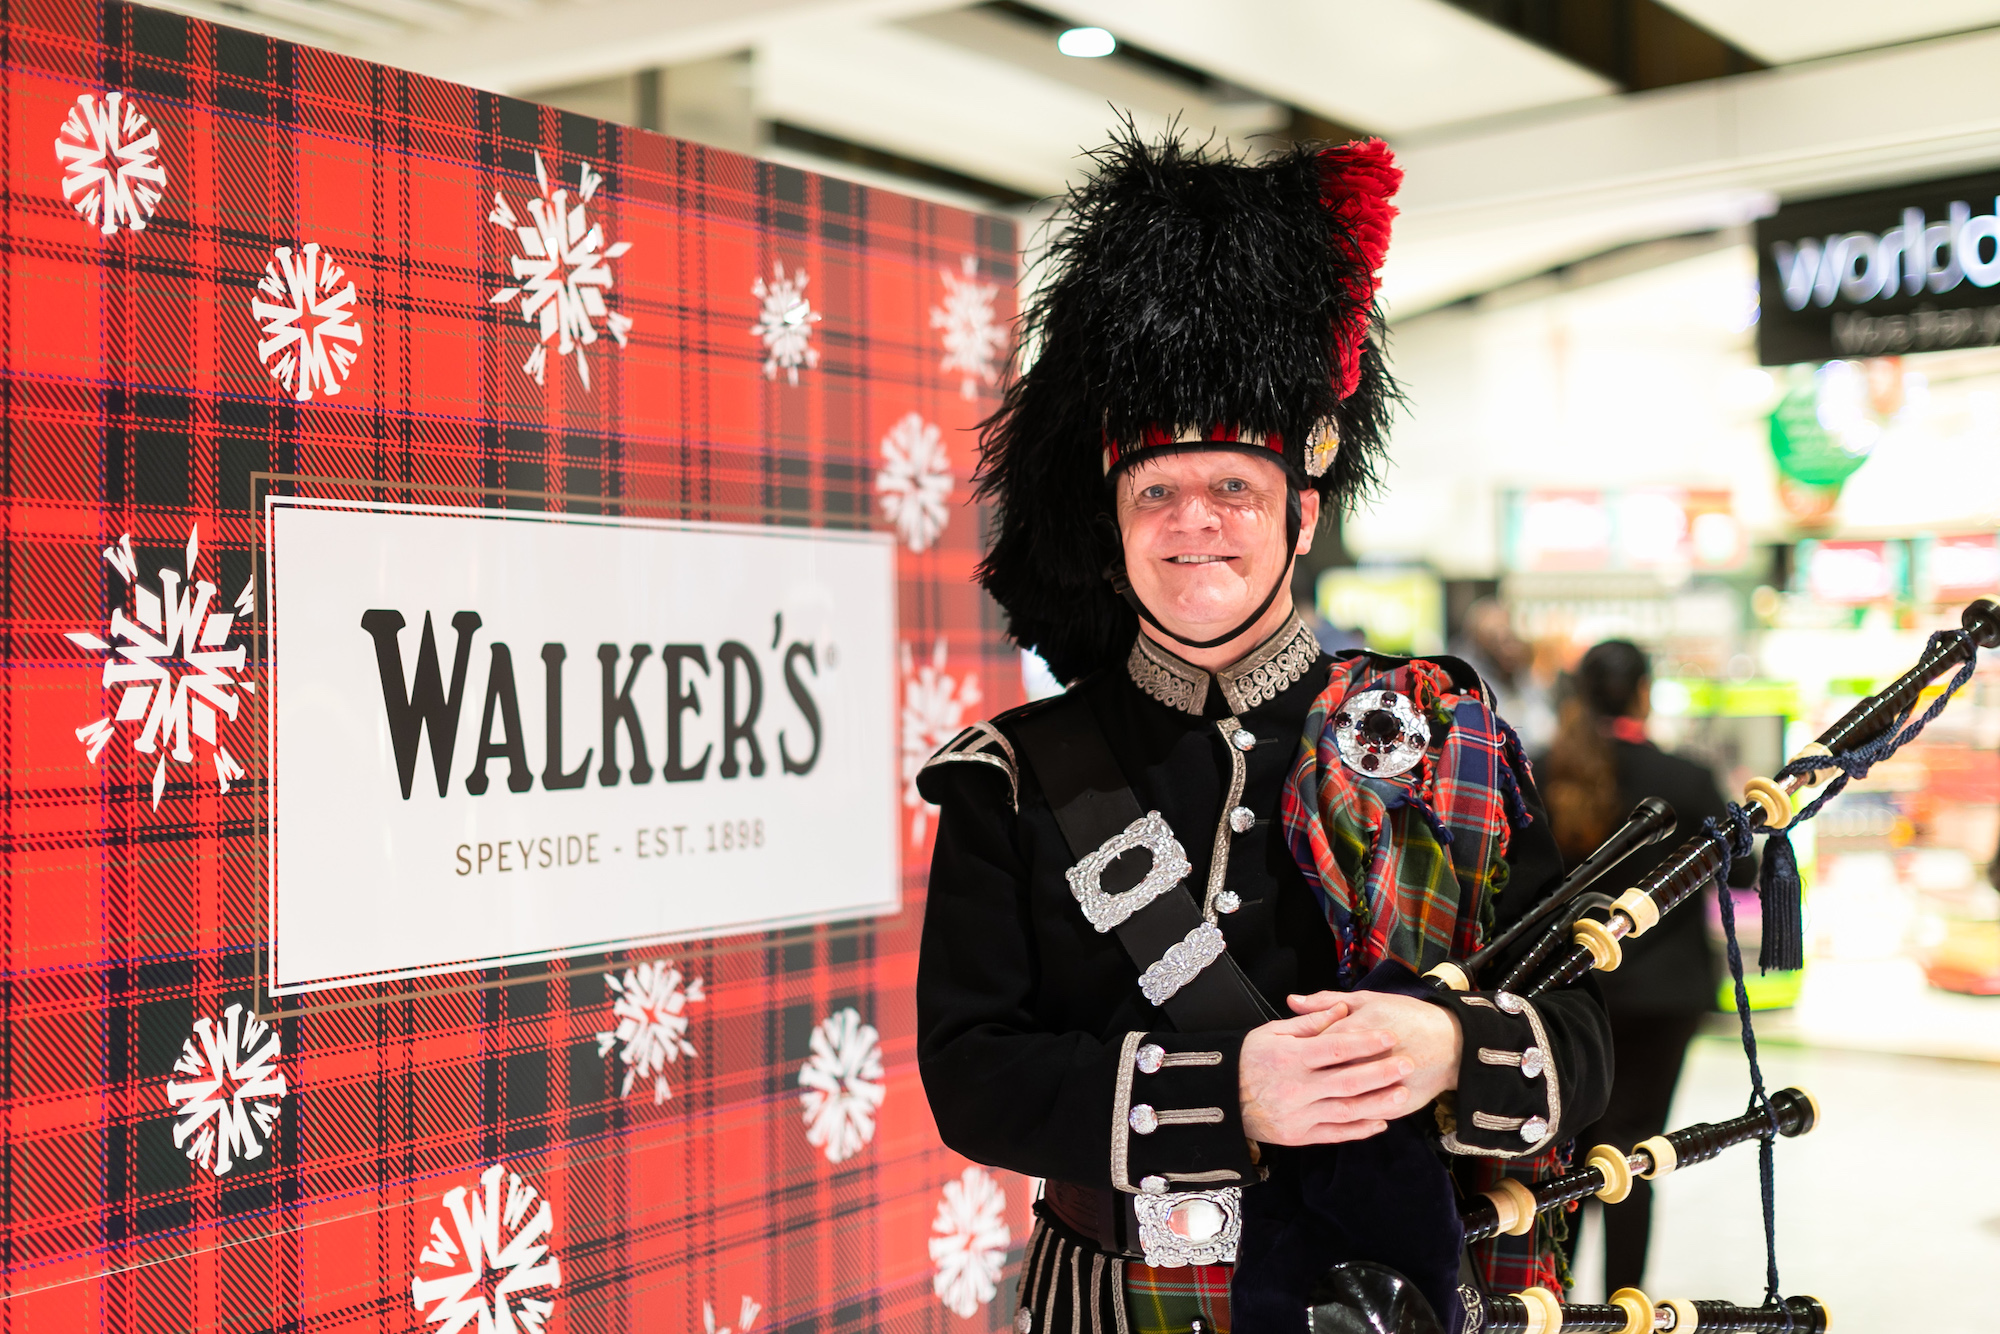 Walker’s Shortbread delights Heathrow travellers with Scottish christmas cheer